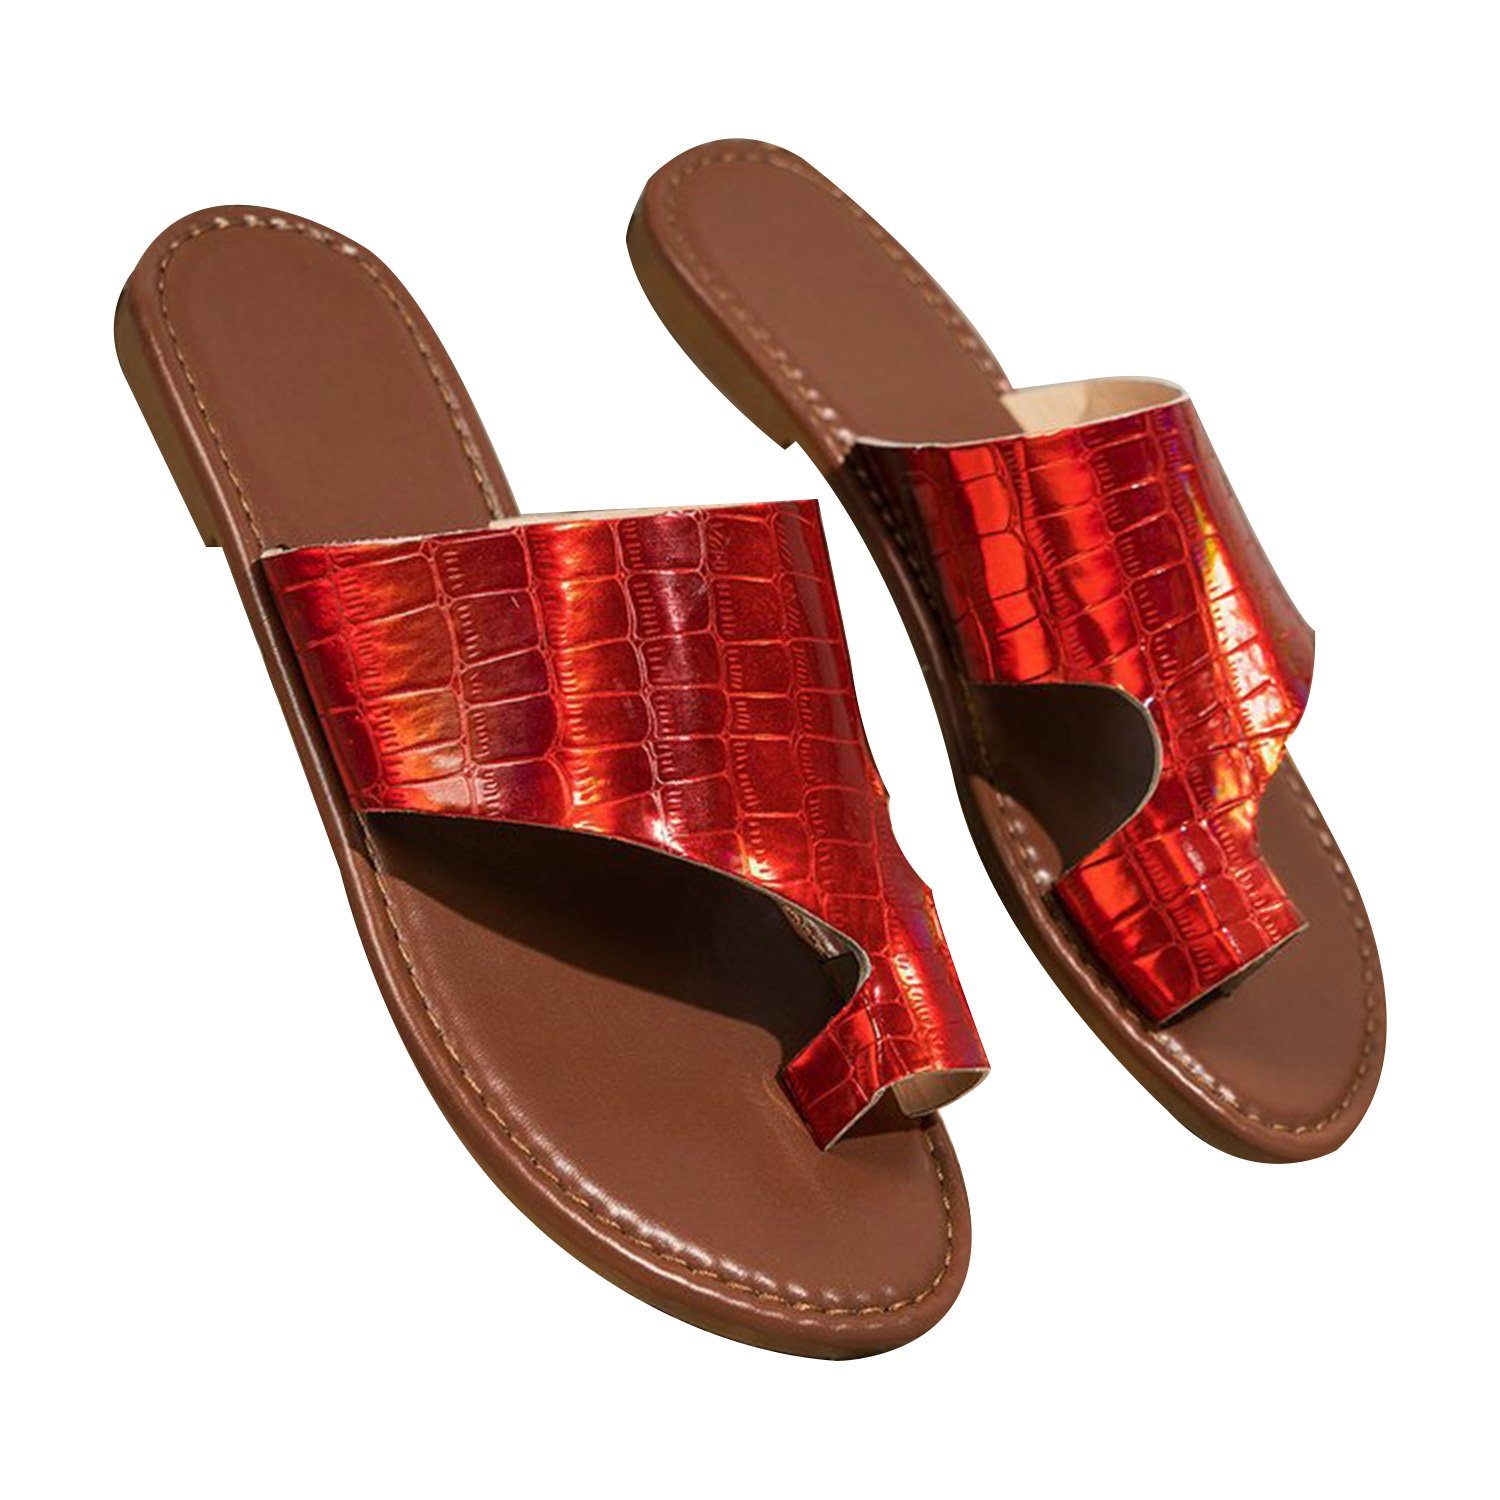 MAGICSHE Lacklederabsatz atmungsaktive Sandale mit Rot Zehenschutz